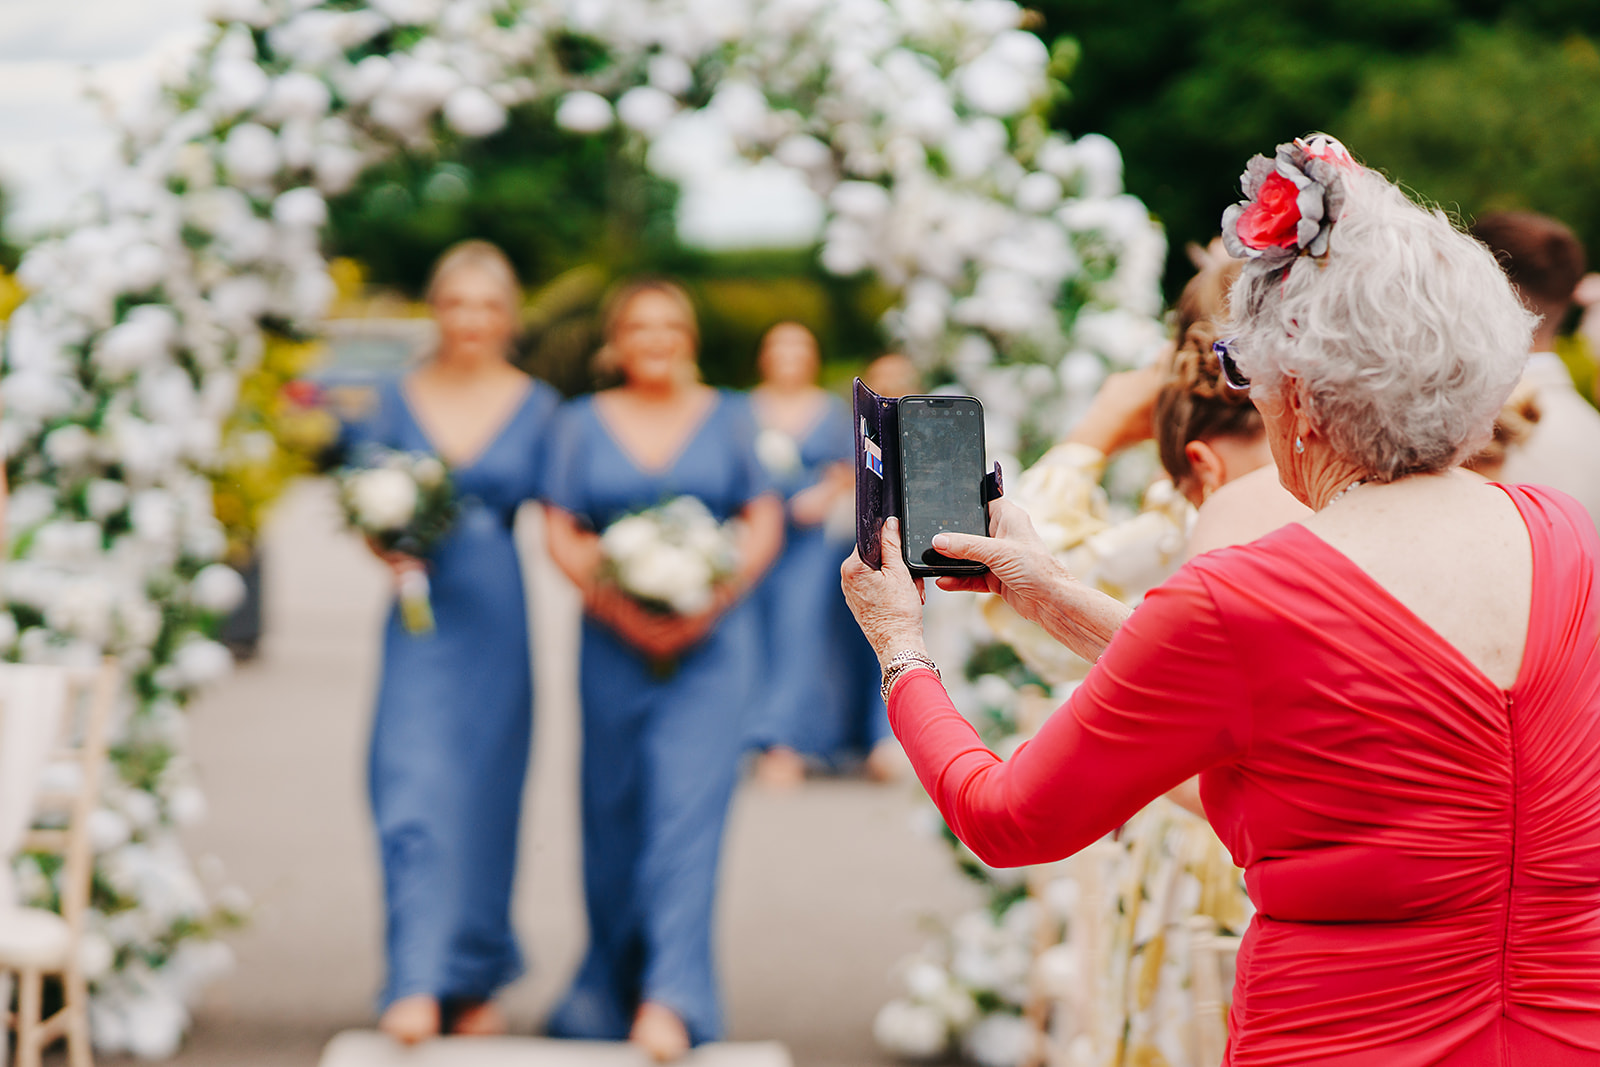 Phone during wedding ceremony